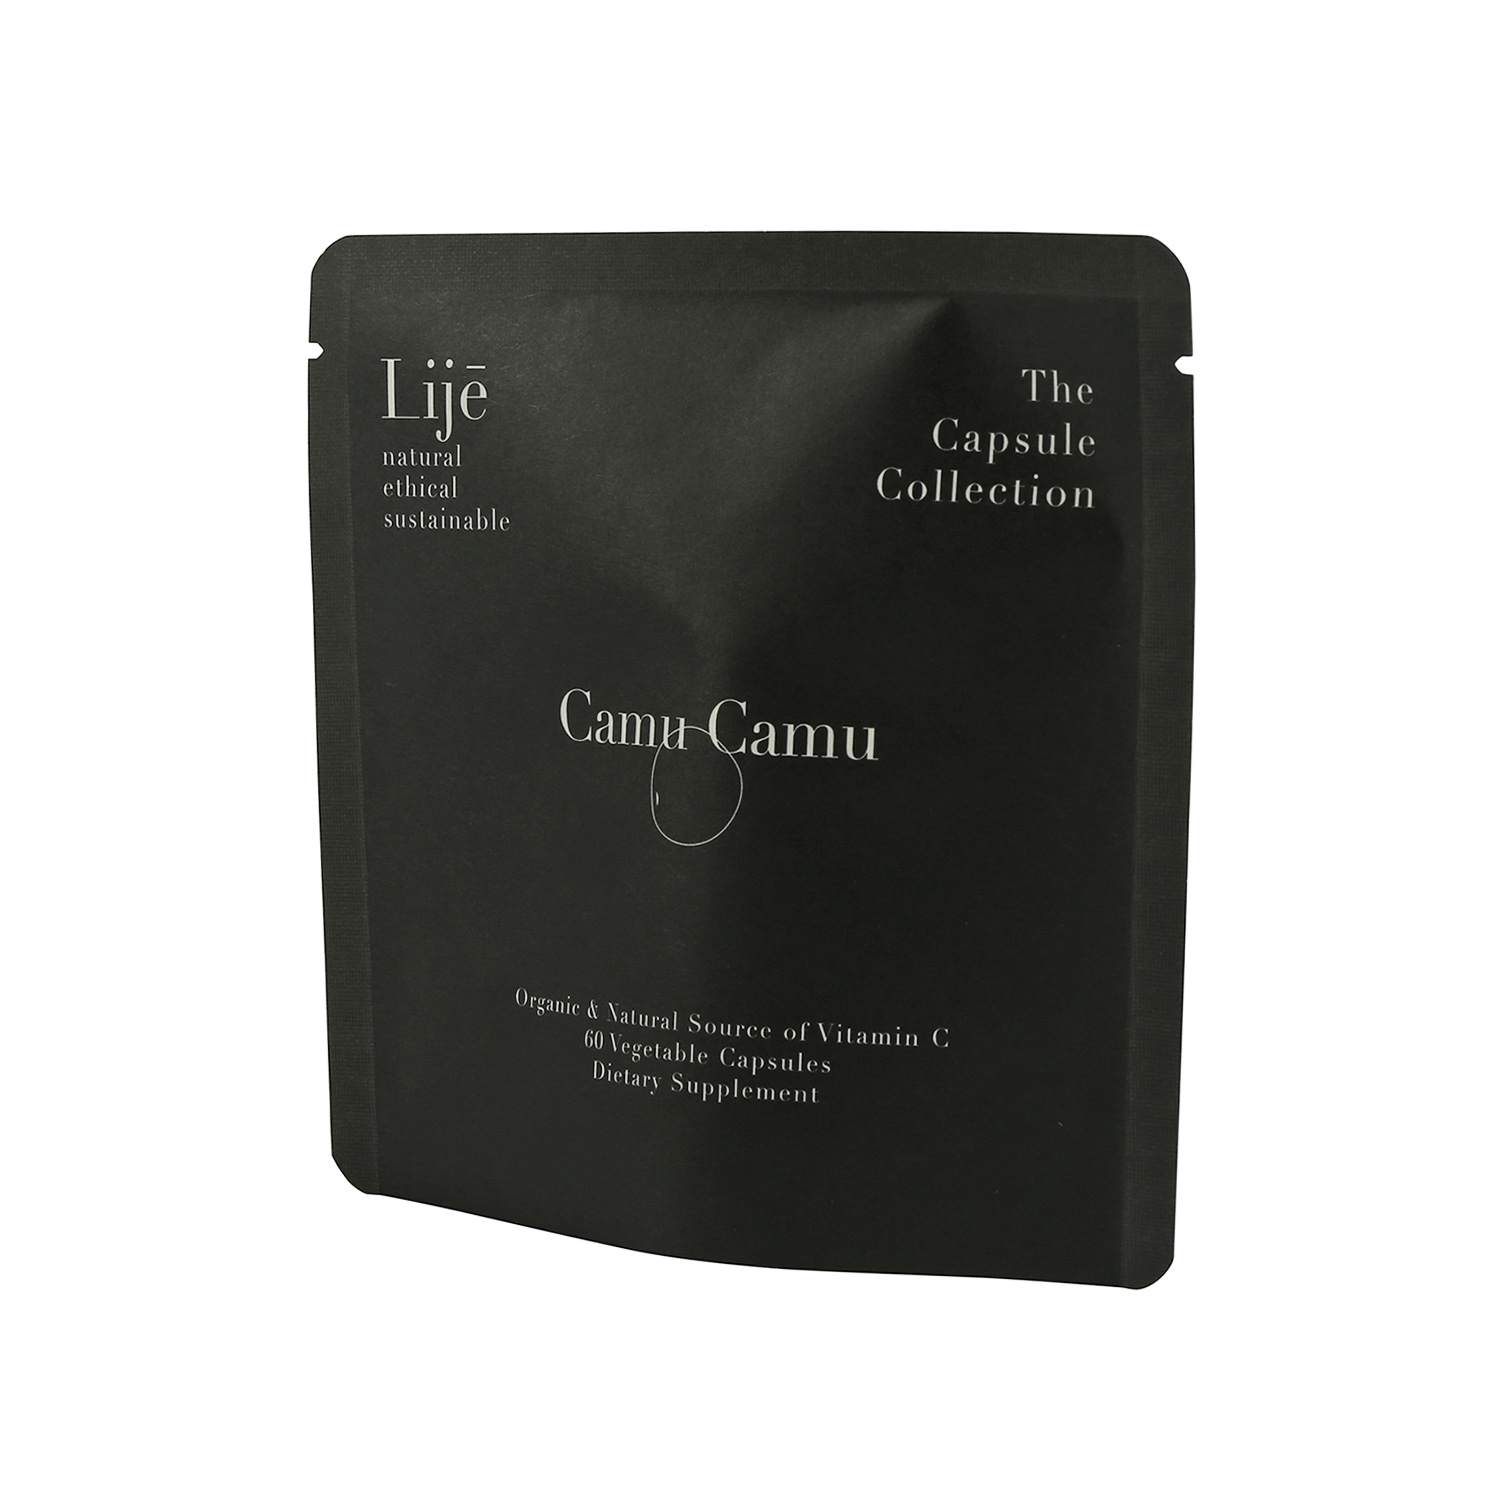 Bolsas de empaquetado modificadas para requisitos particulares del polvo del café compostable 3 bolsas de papel del sello lateral